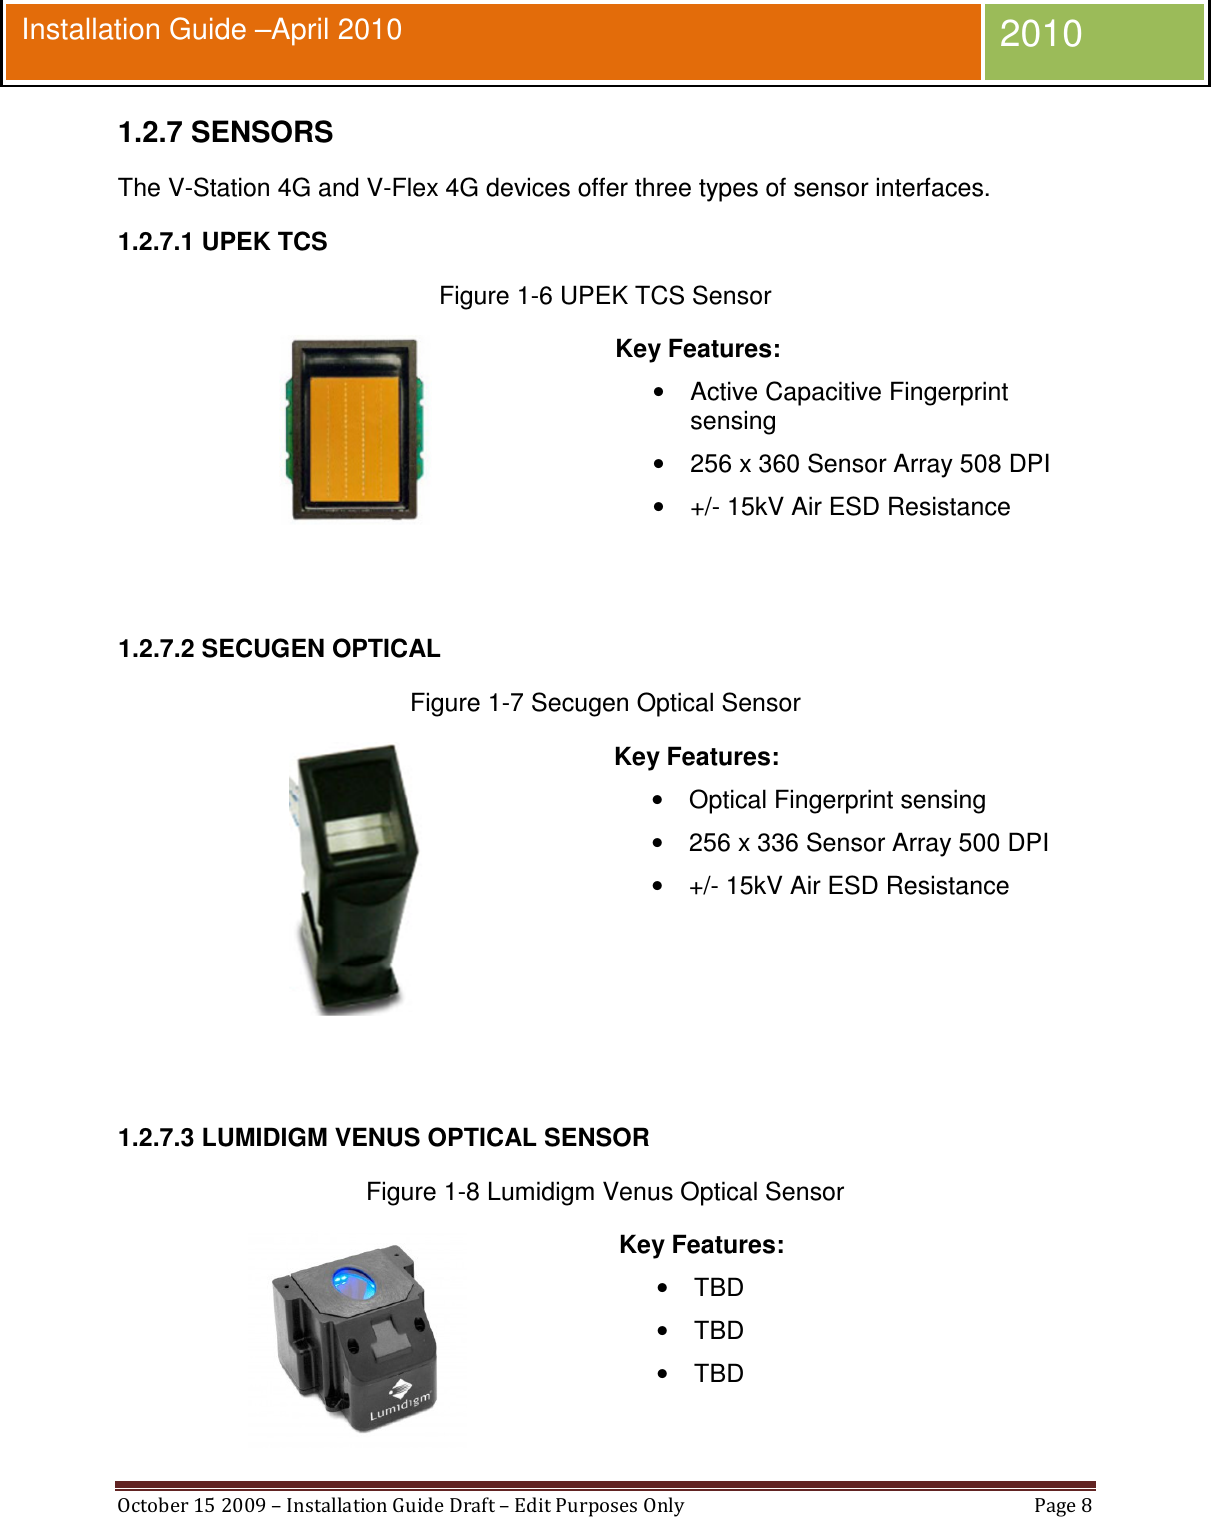  October 15 2009 – Installation Guide Draft – Edit Purposes Only  Page 8  Installation Guide –April 2010 2010 1.2.7 SENSORS The V-Station 4G and V-Flex 4G devices offer three types of sensor interfaces. 1.2.7.1 UPEK TCS Figure 1-6 UPEK TCS Sensor  Key Features: •  Active Capacitive Fingerprint sensing •  256 x 360 Sensor Array 508 DPI •  +/- 15kV Air ESD Resistance   1.2.7.2 SECUGEN OPTICAL Figure 1-7 Secugen Optical Sensor  Key Features: •  Optical Fingerprint sensing •  256 x 336 Sensor Array 500 DPI •  +/- 15kV Air ESD Resistance   1.2.7.3 LUMIDIGM VENUS OPTICAL SENSOR Figure 1-8 Lumidigm Venus Optical Sensor  Key Features: •  TBD •  TBD •  TBD 